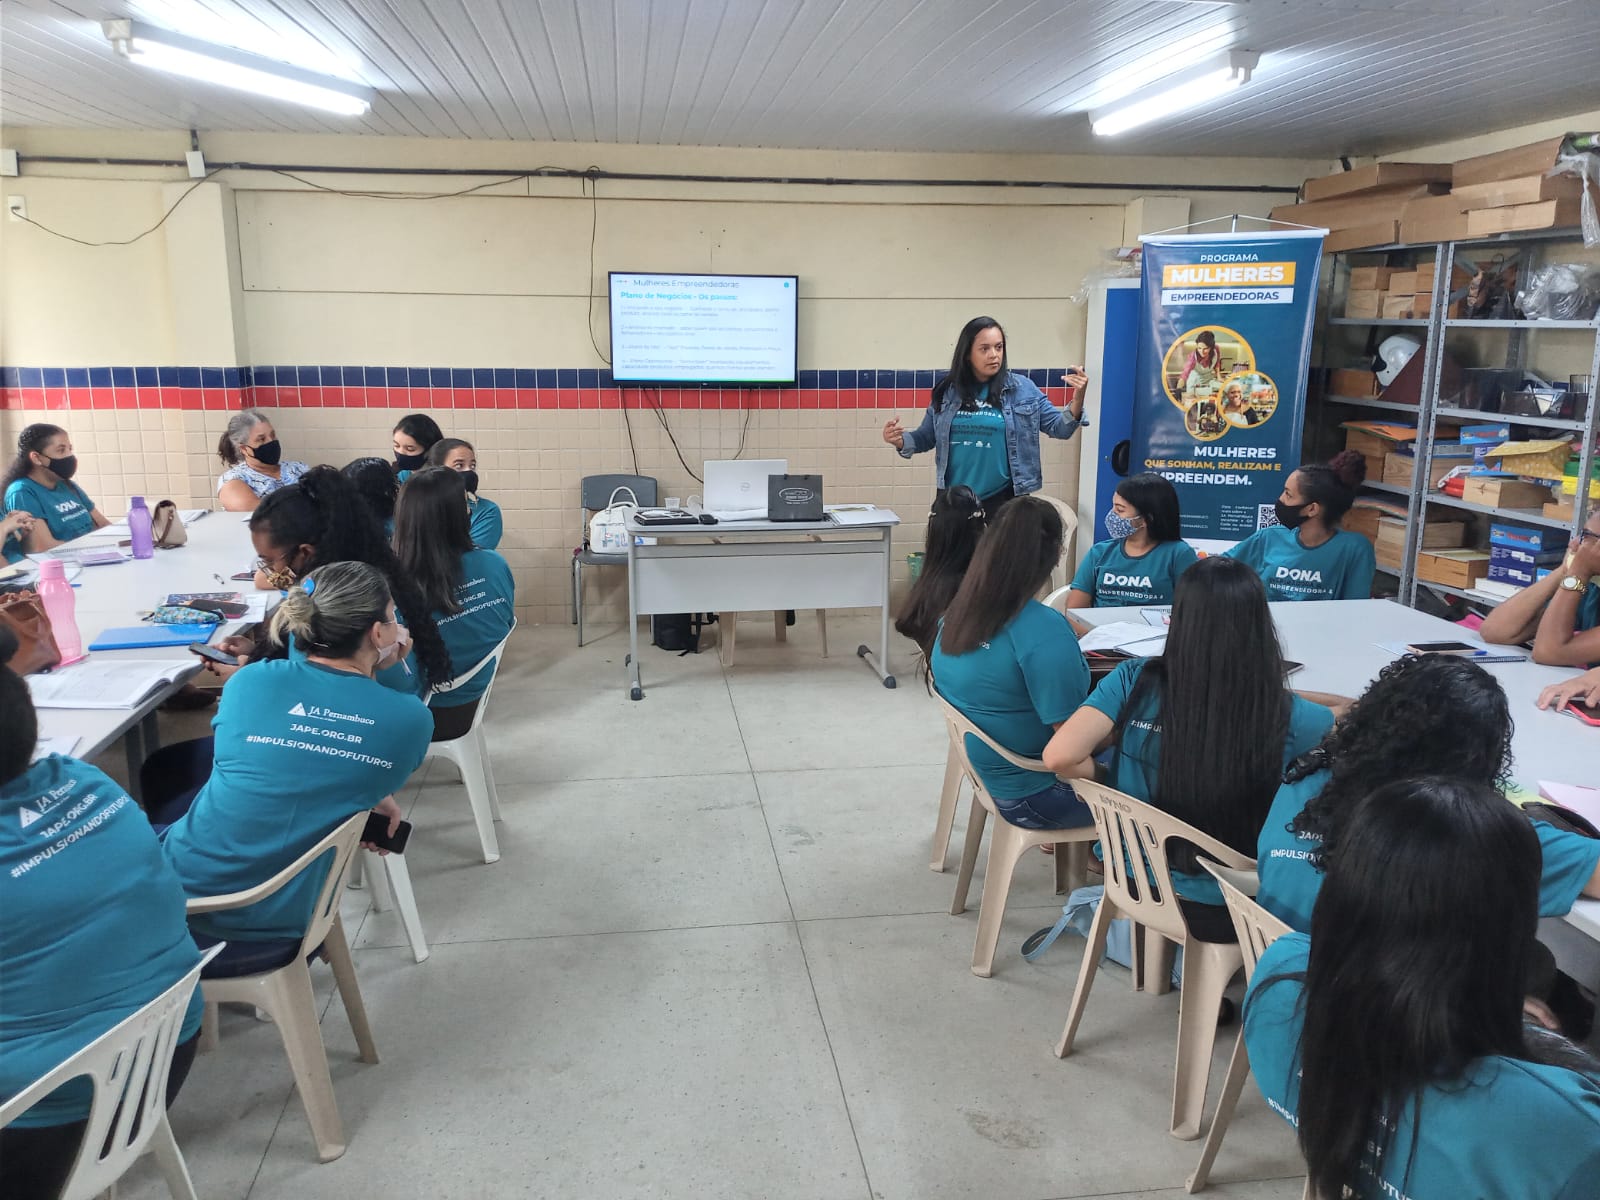 Mulheres Empreendedoras, da ONG Junior Achievement Pernambuco, incentiva jovens a empreenderem